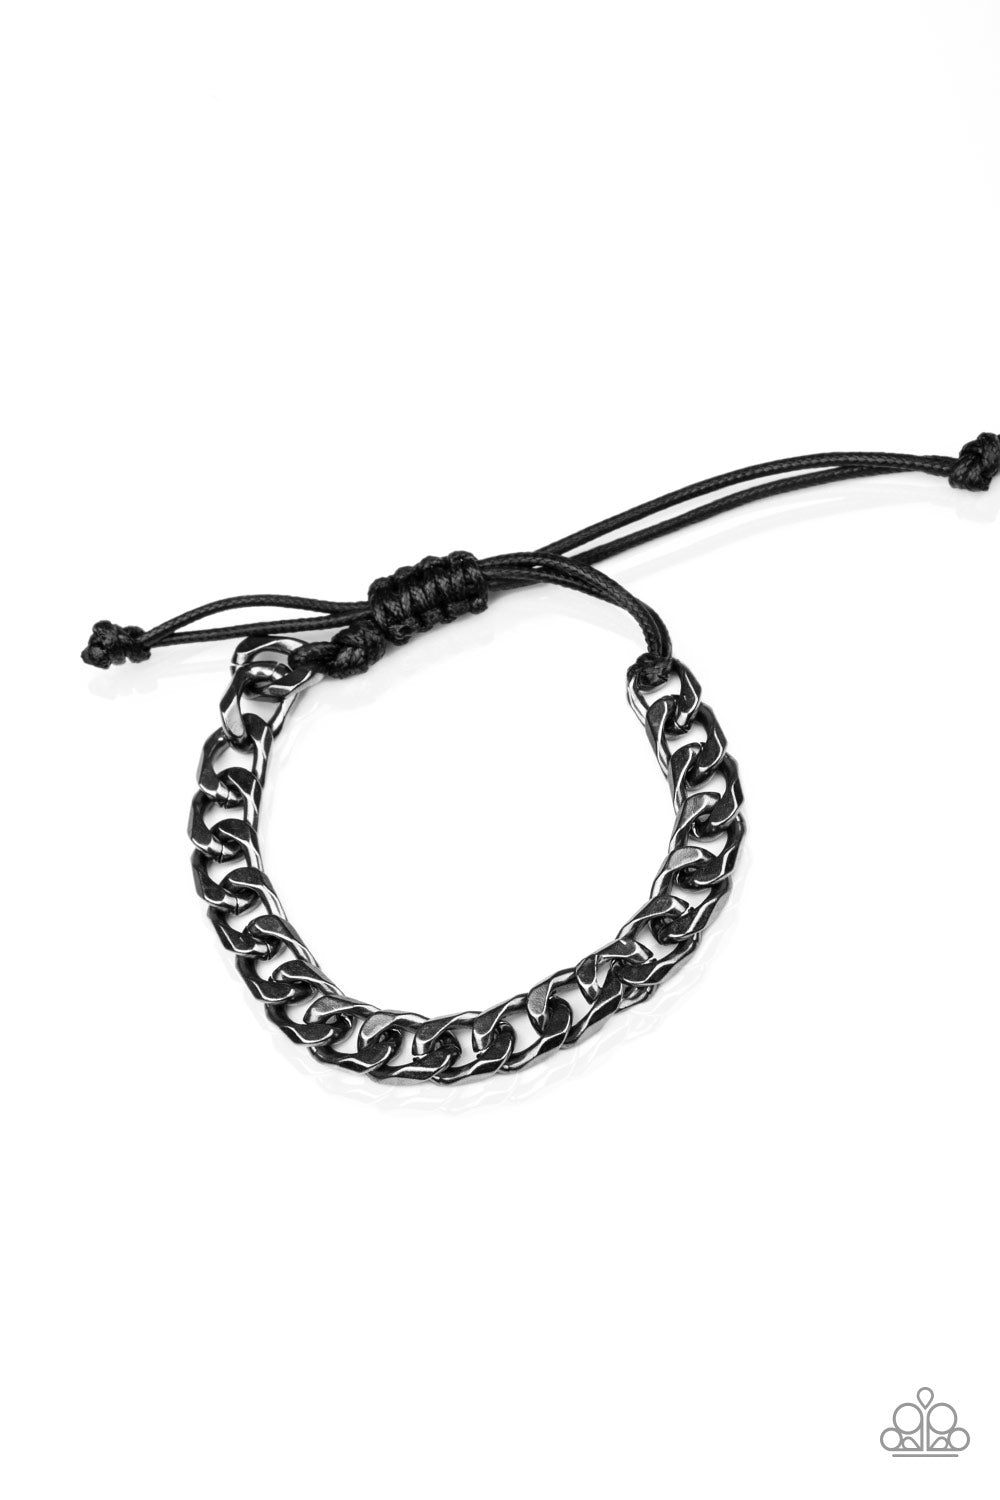 Rulebreaker Black Urban Bracelet - Paparazzi Accessories